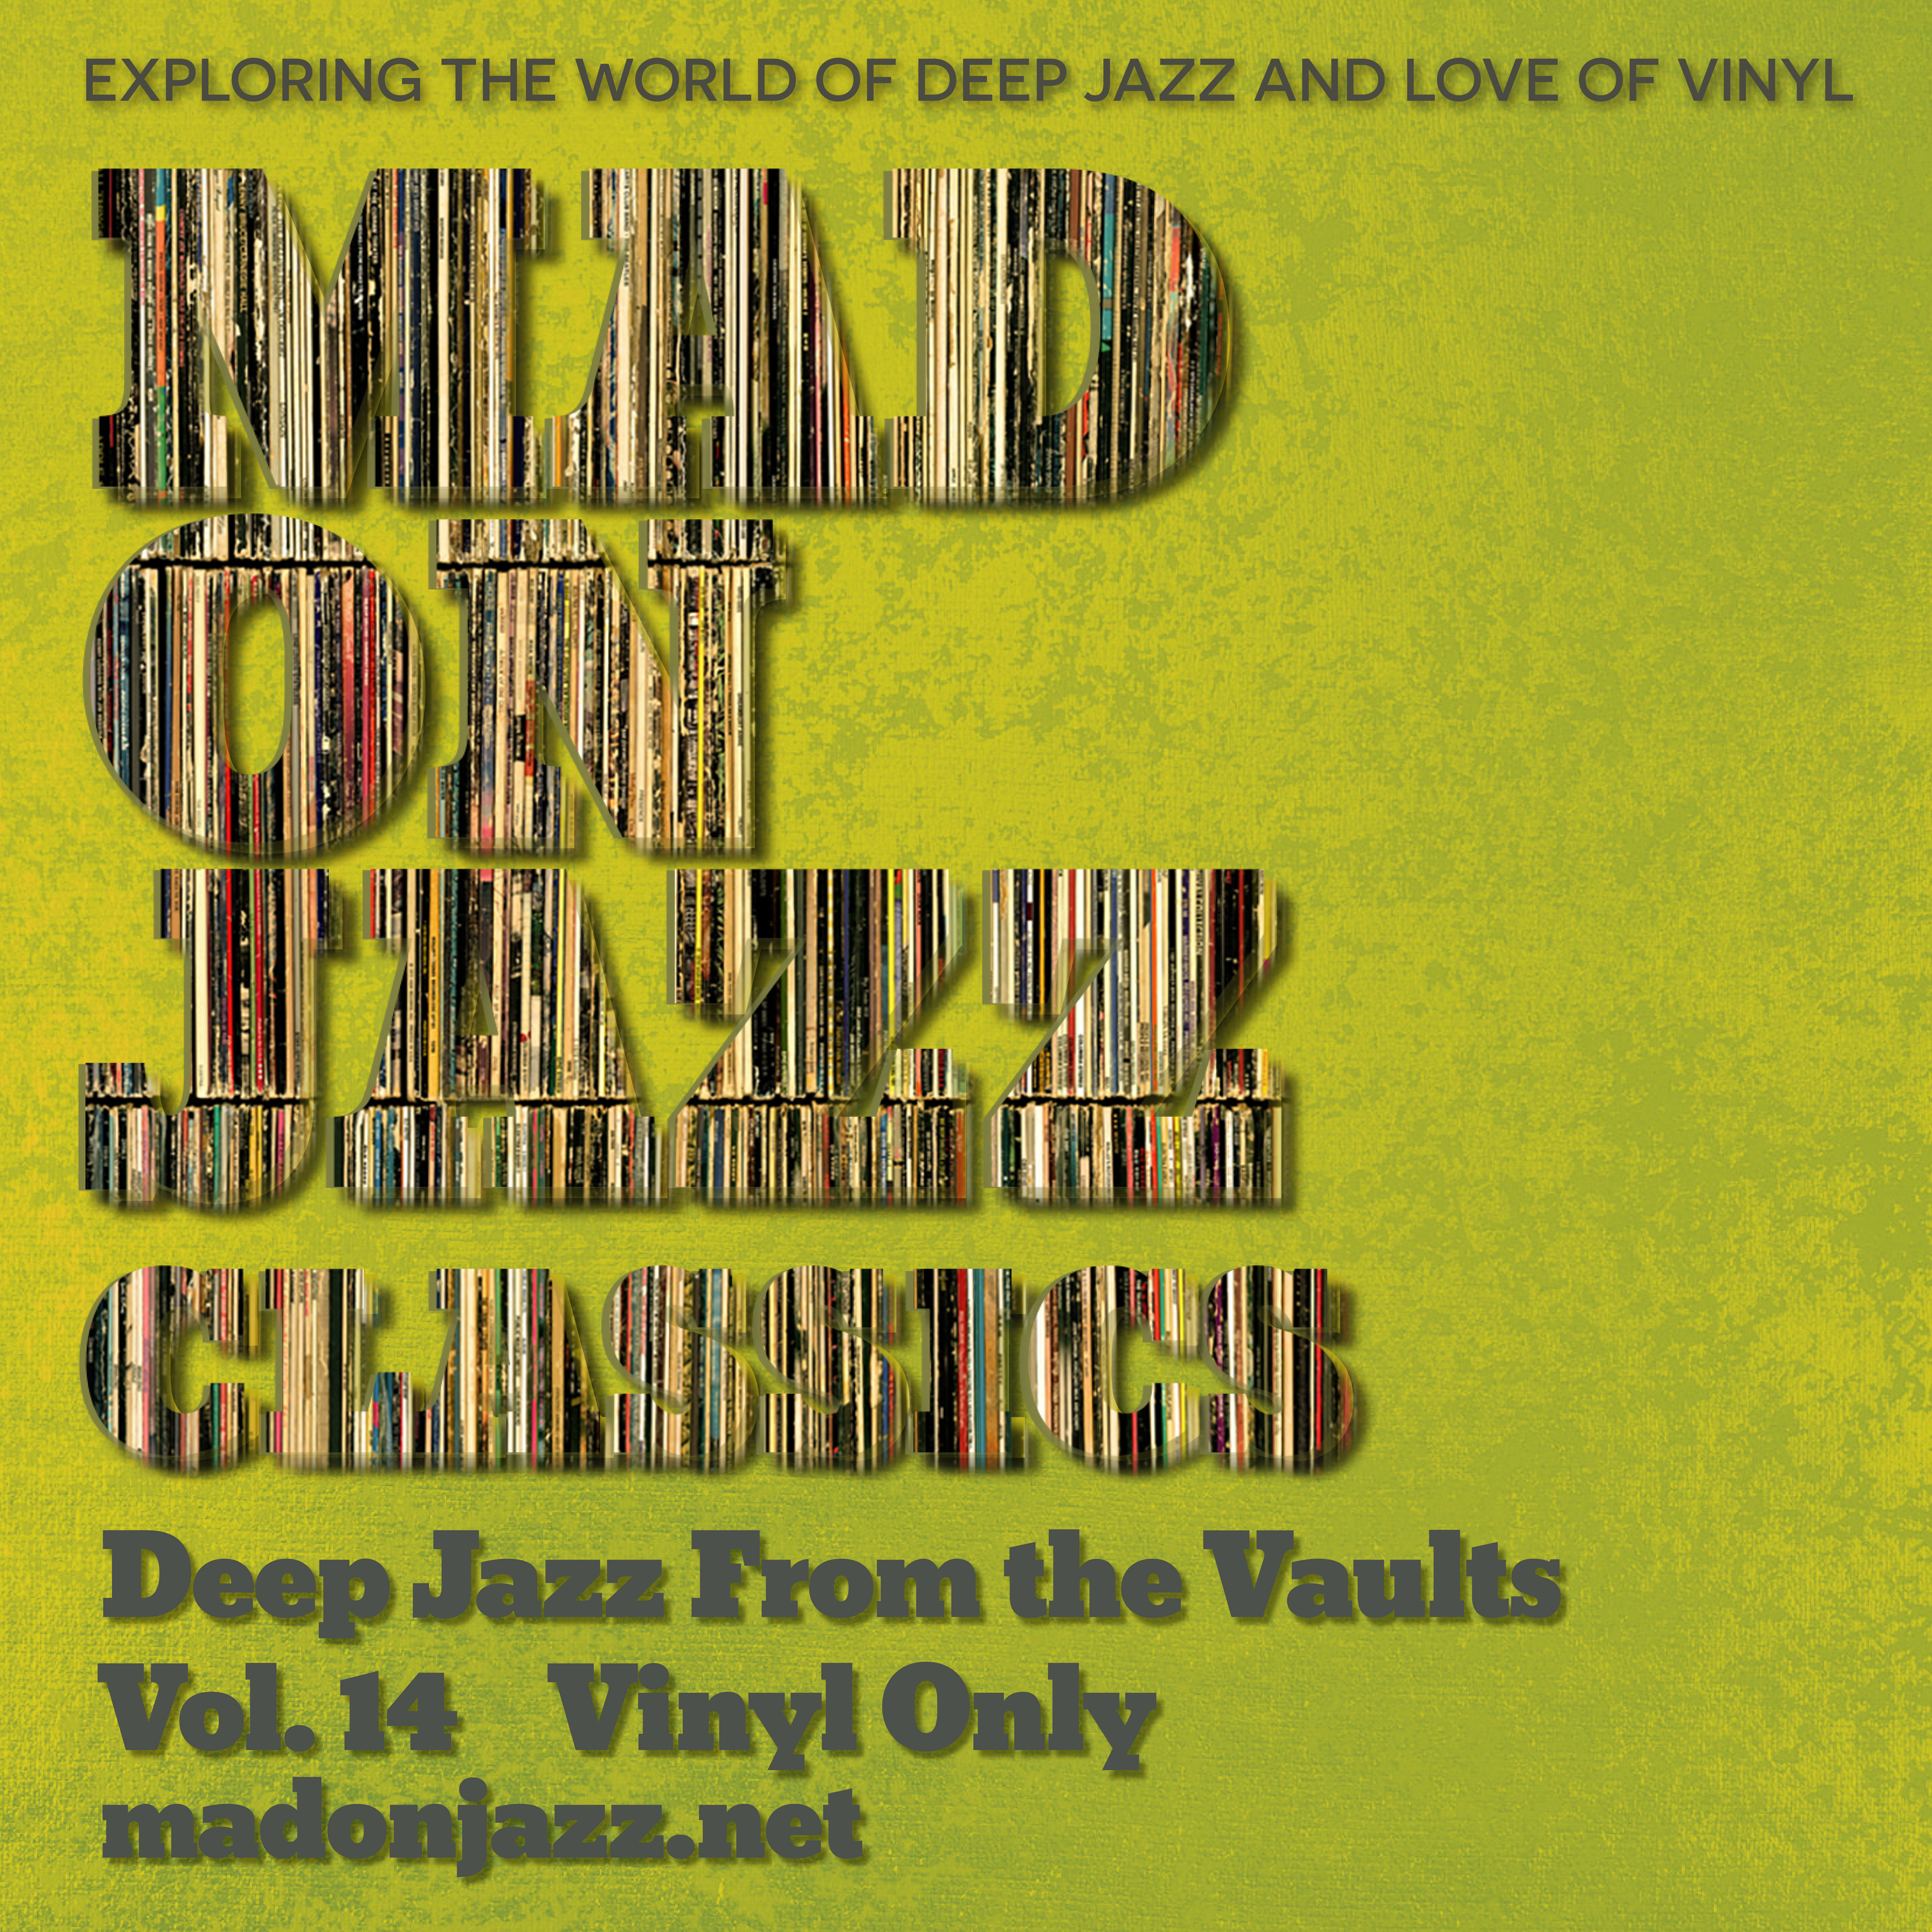 MADONJAZZ CLASSICS: Deep Jazz From the Vaults vol 14 - Vinyl only